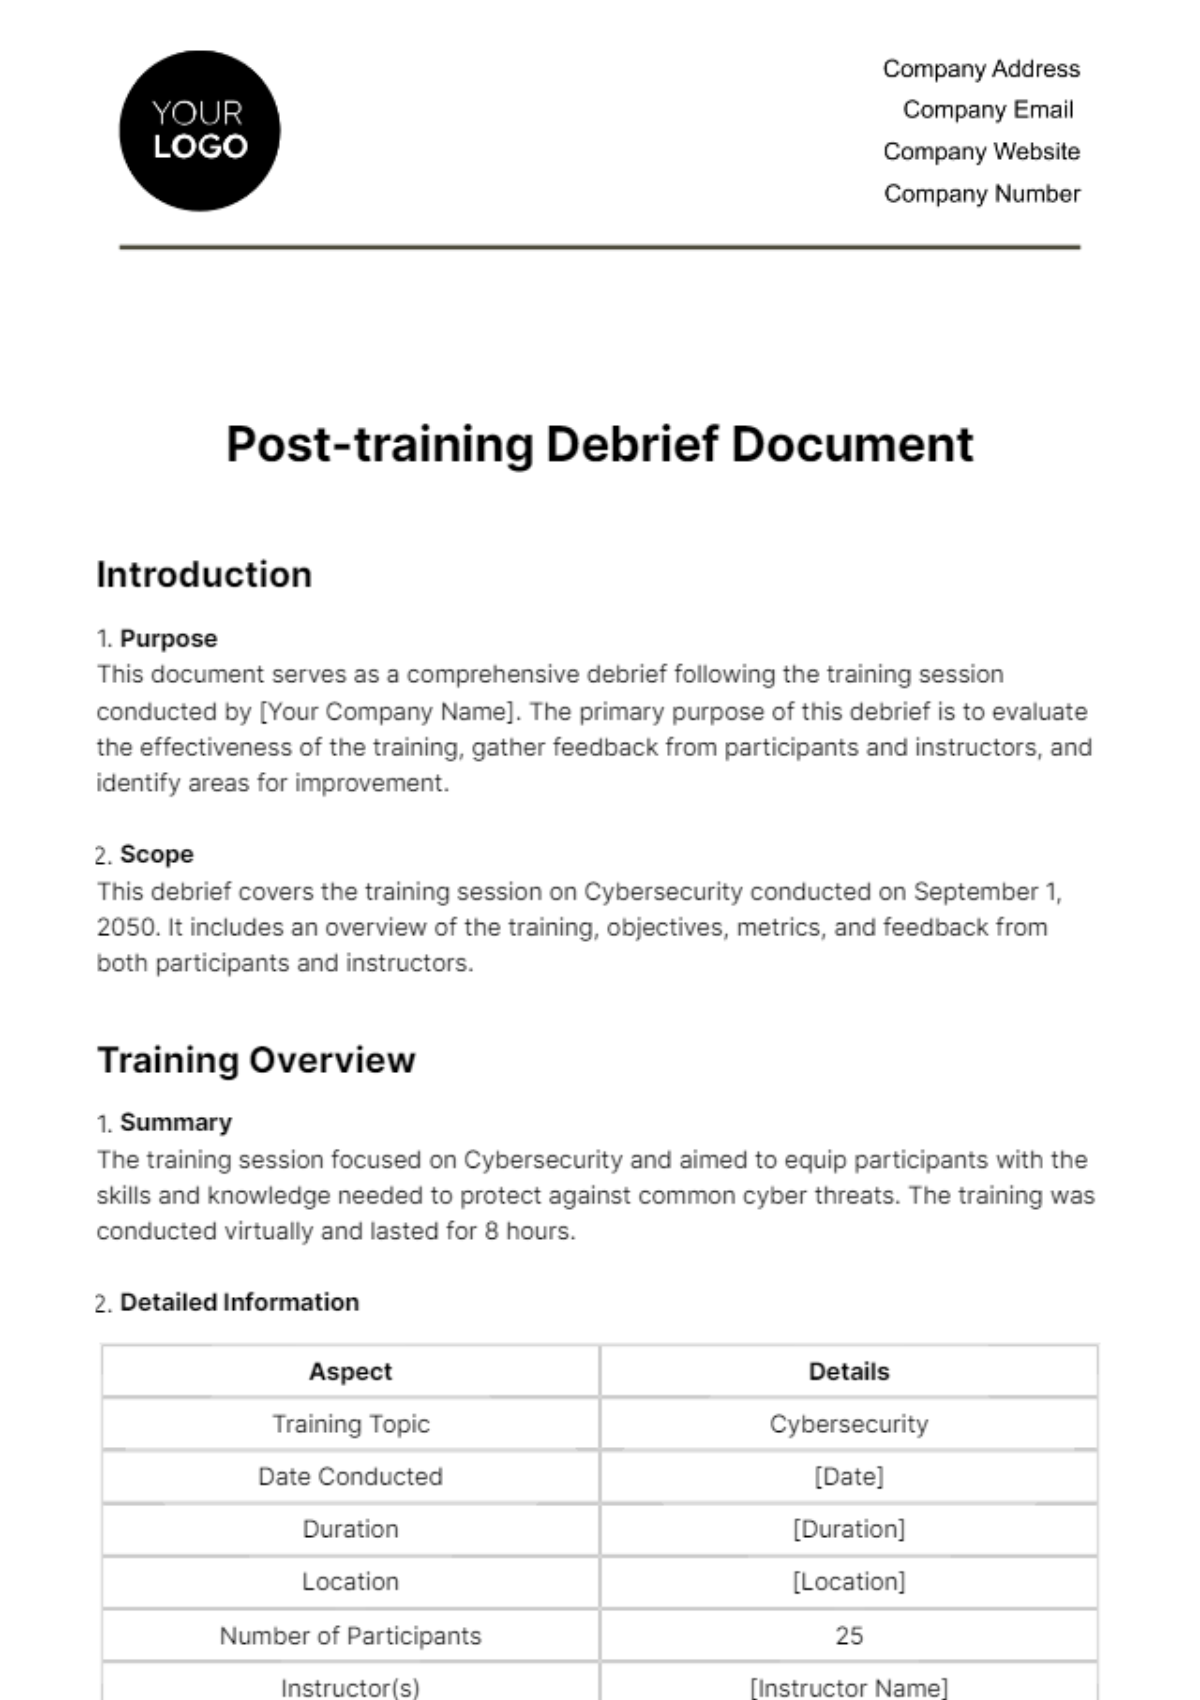 Post-training Debrief Document HR Template